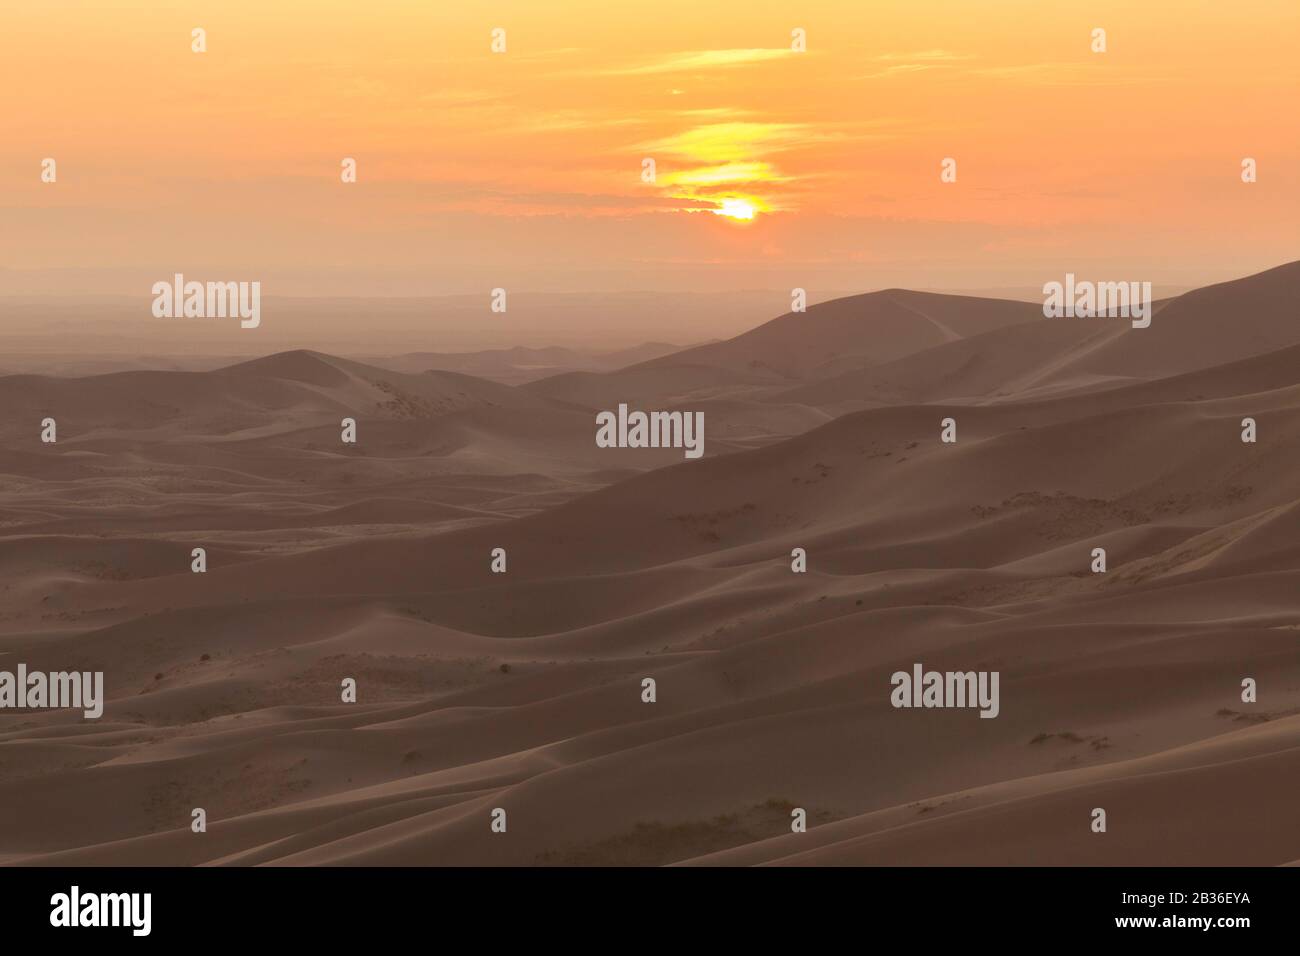 Mongolia, Omnogovi province, Khongor Sand Dunes, elevated view on the dunes at sunset Stock Photo